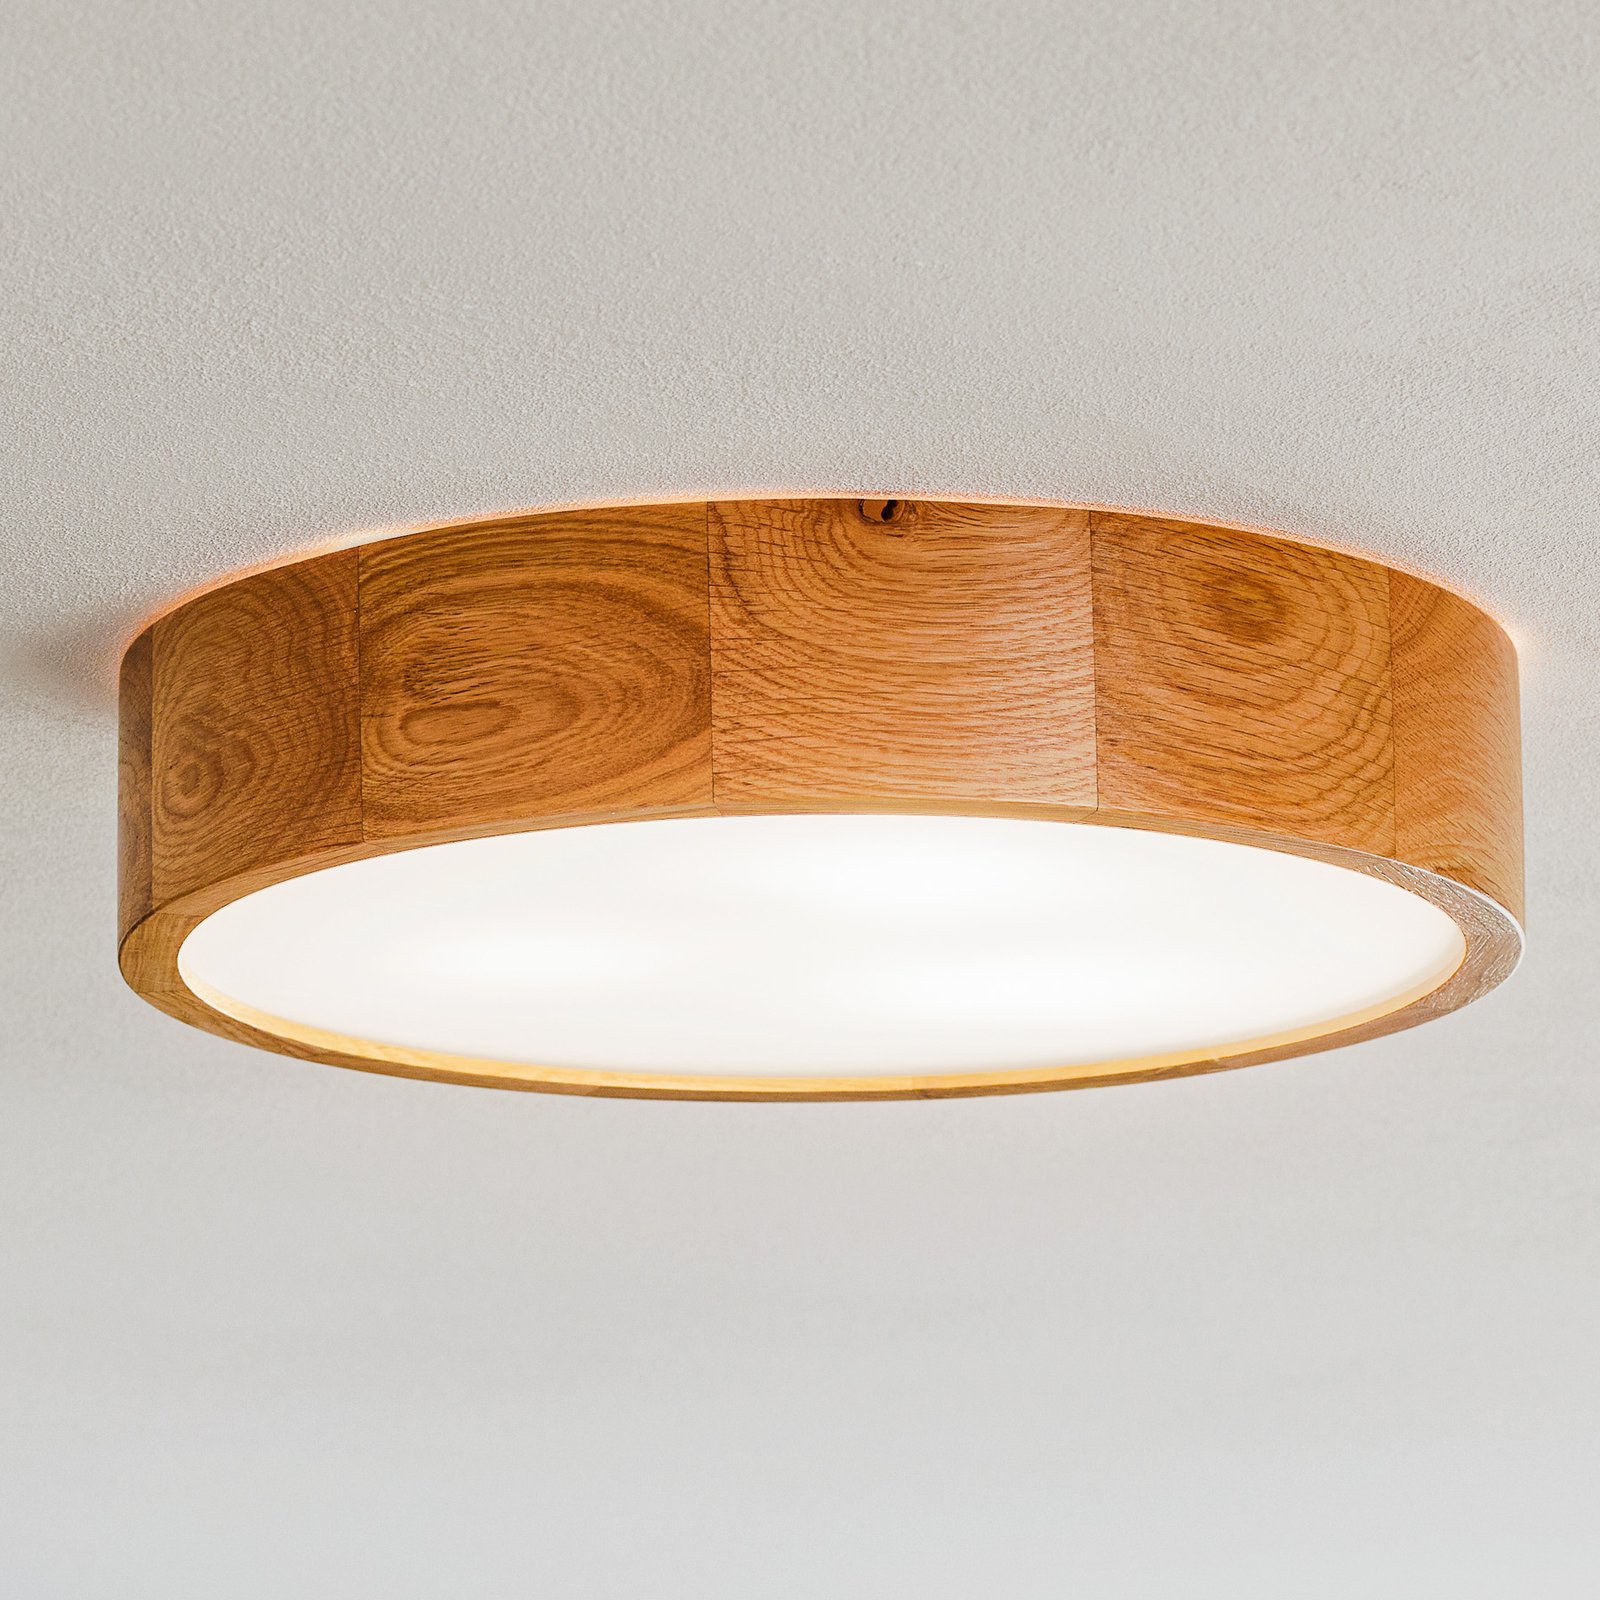 Cleo ceiling light, Ø 38 cm, oak